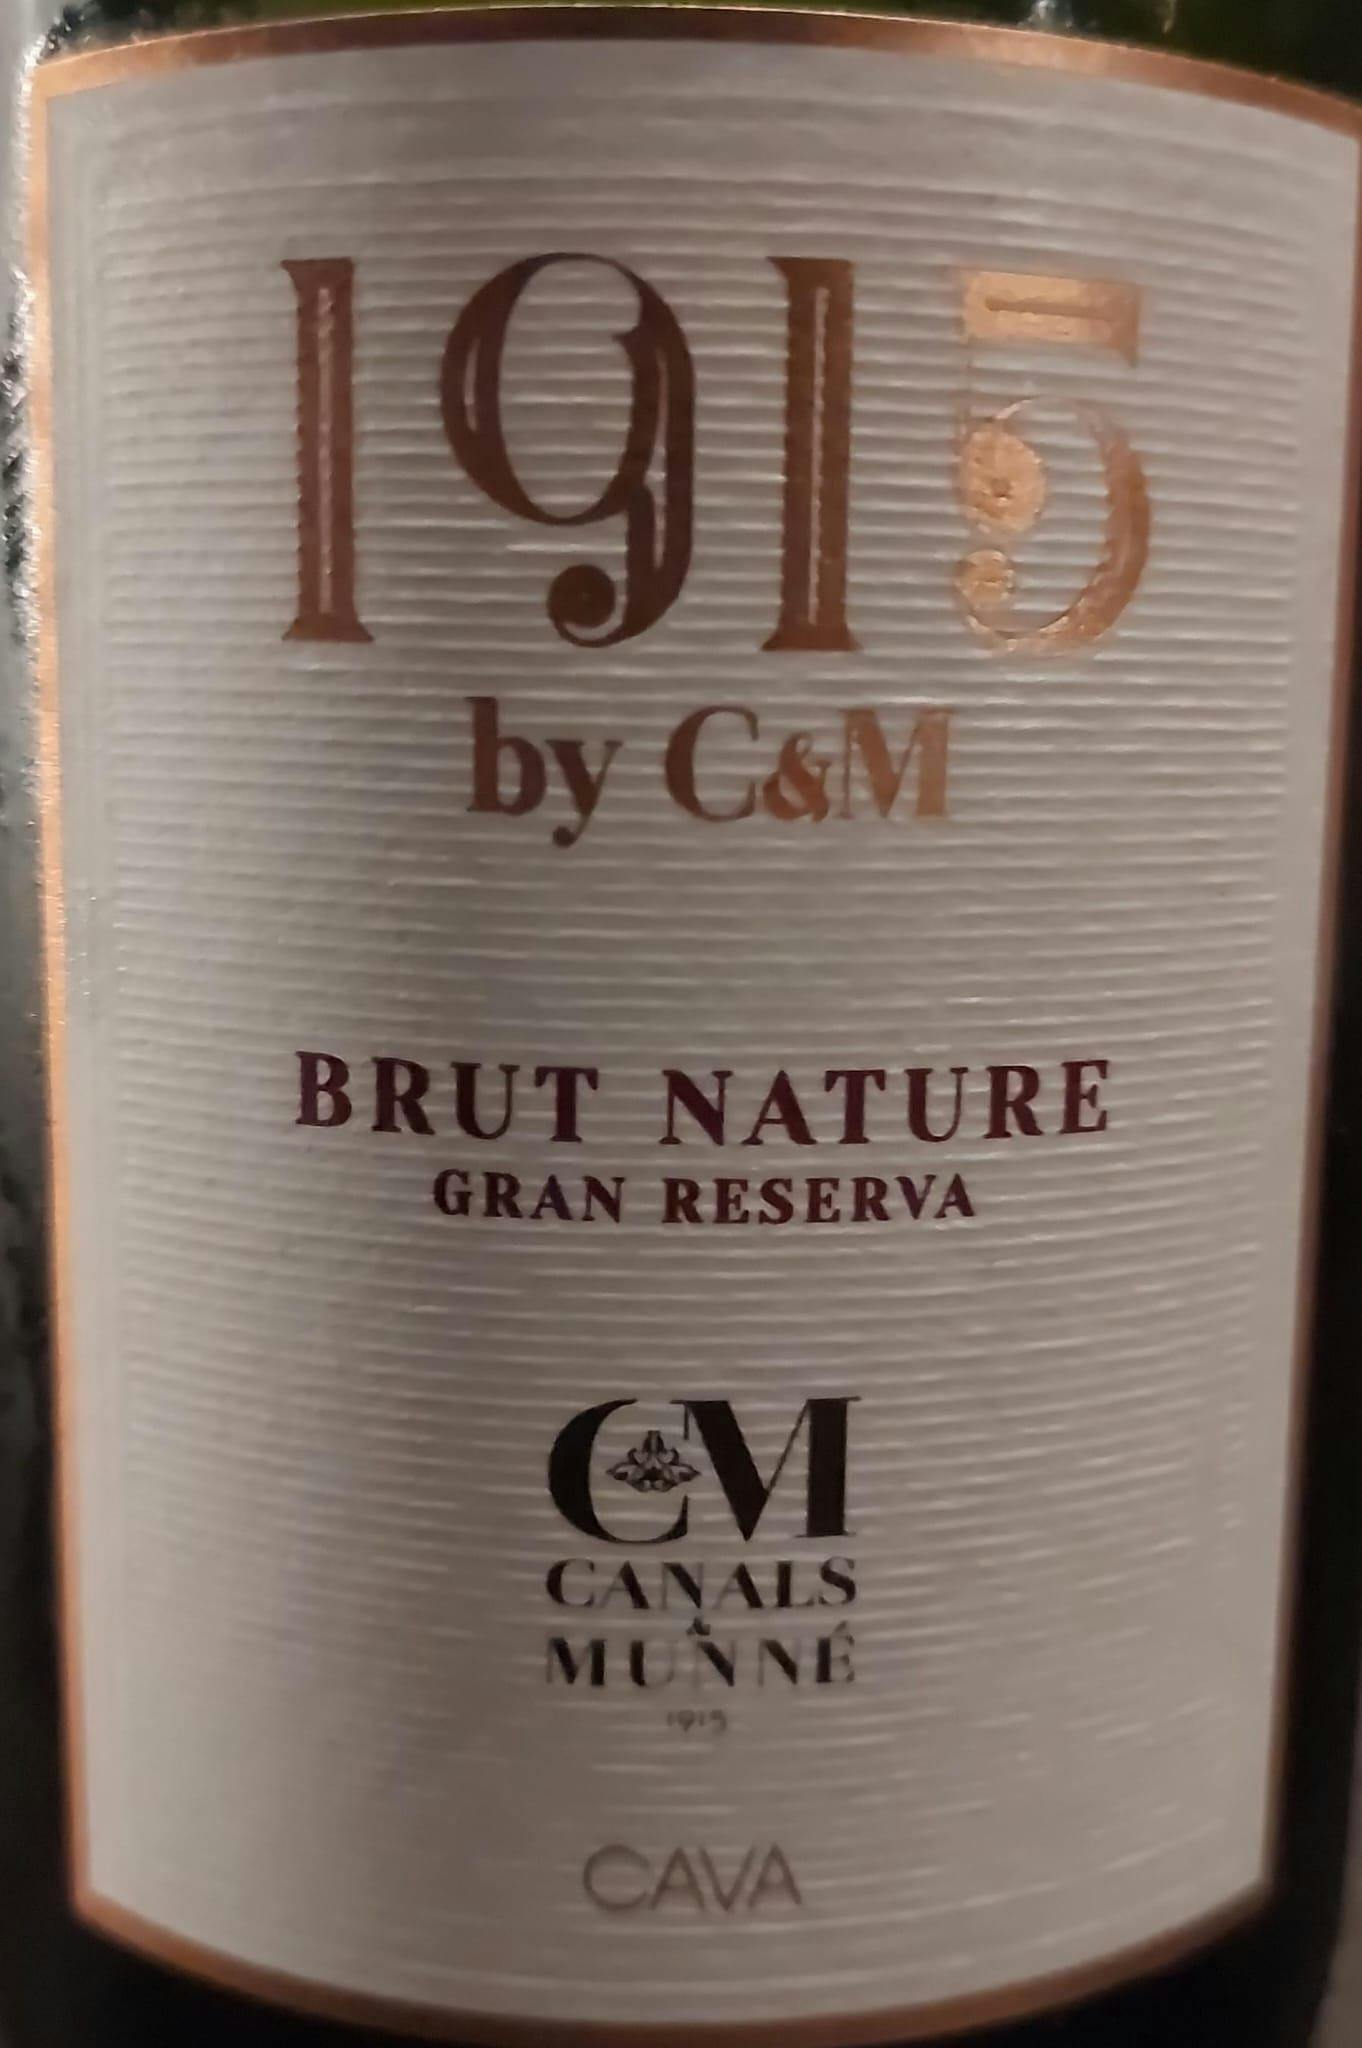 1915 by C&M Brut Nature Gran Reserva 2017 | Canals & Munné